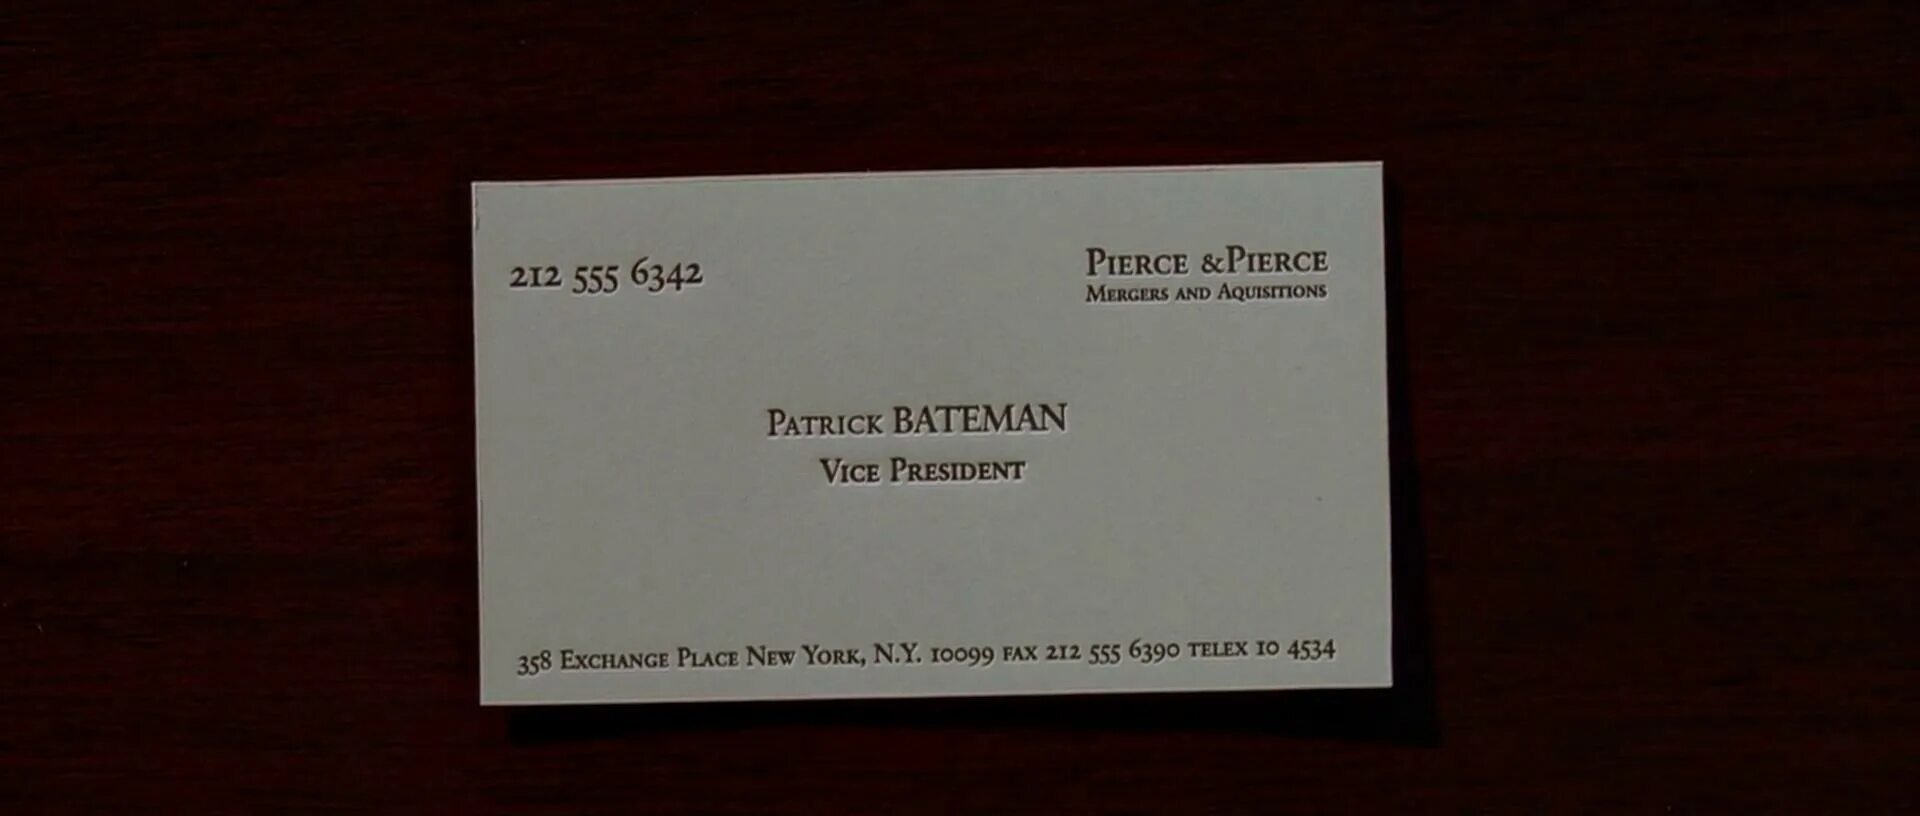 A new life bateman took a glance. Американский психопат визитка. Визитка из американского психопата. Американские визитки.